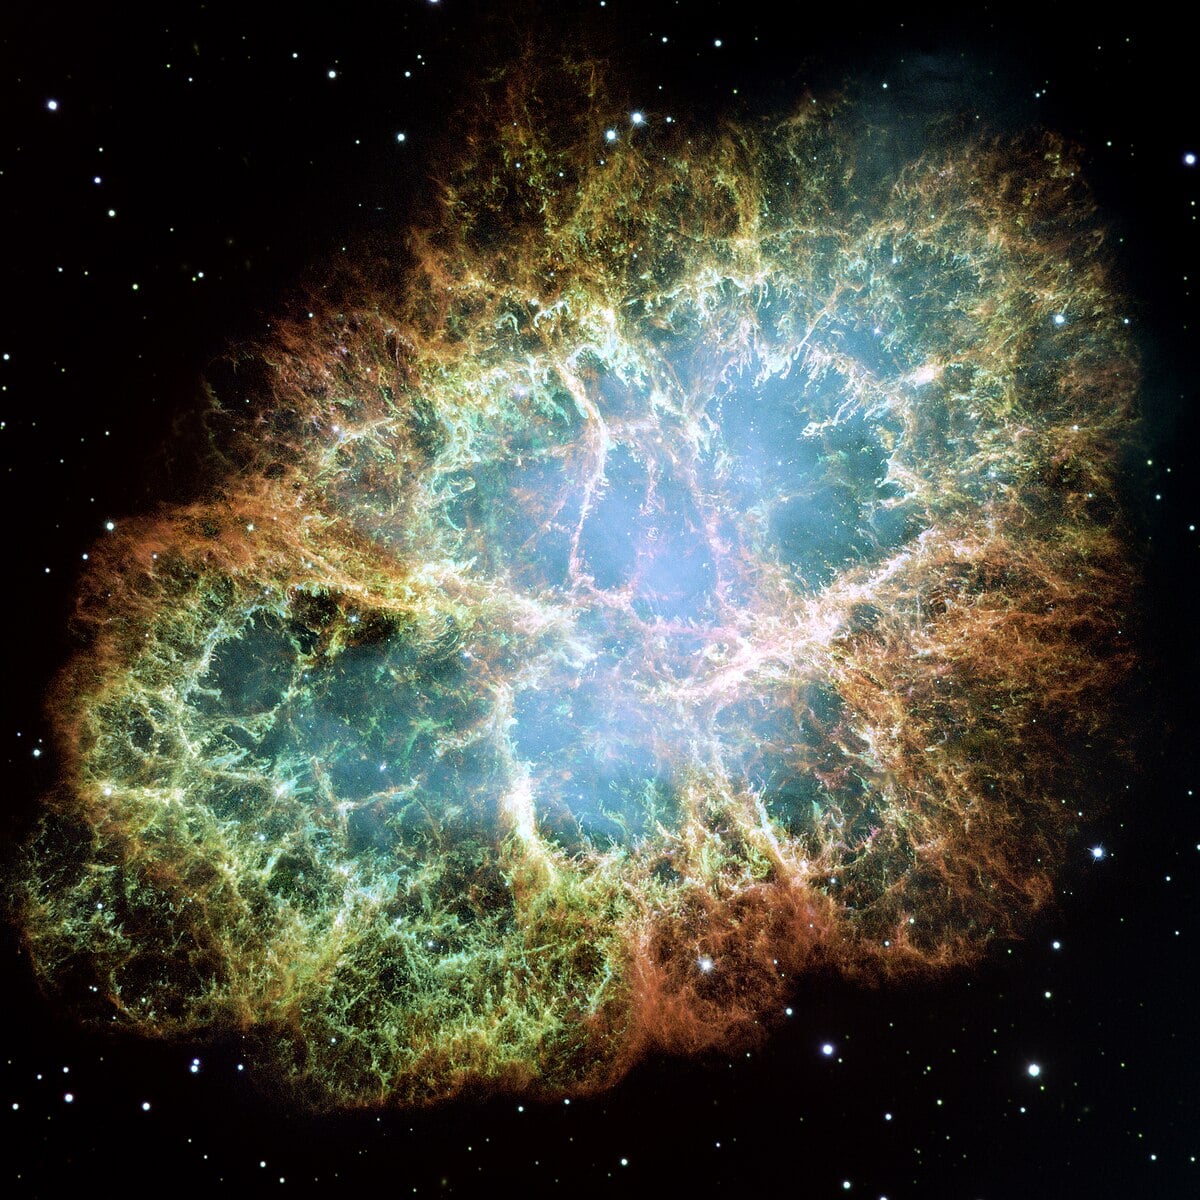 Crab Nebula Or NGC 1952-one of Supernova remnants nebulae